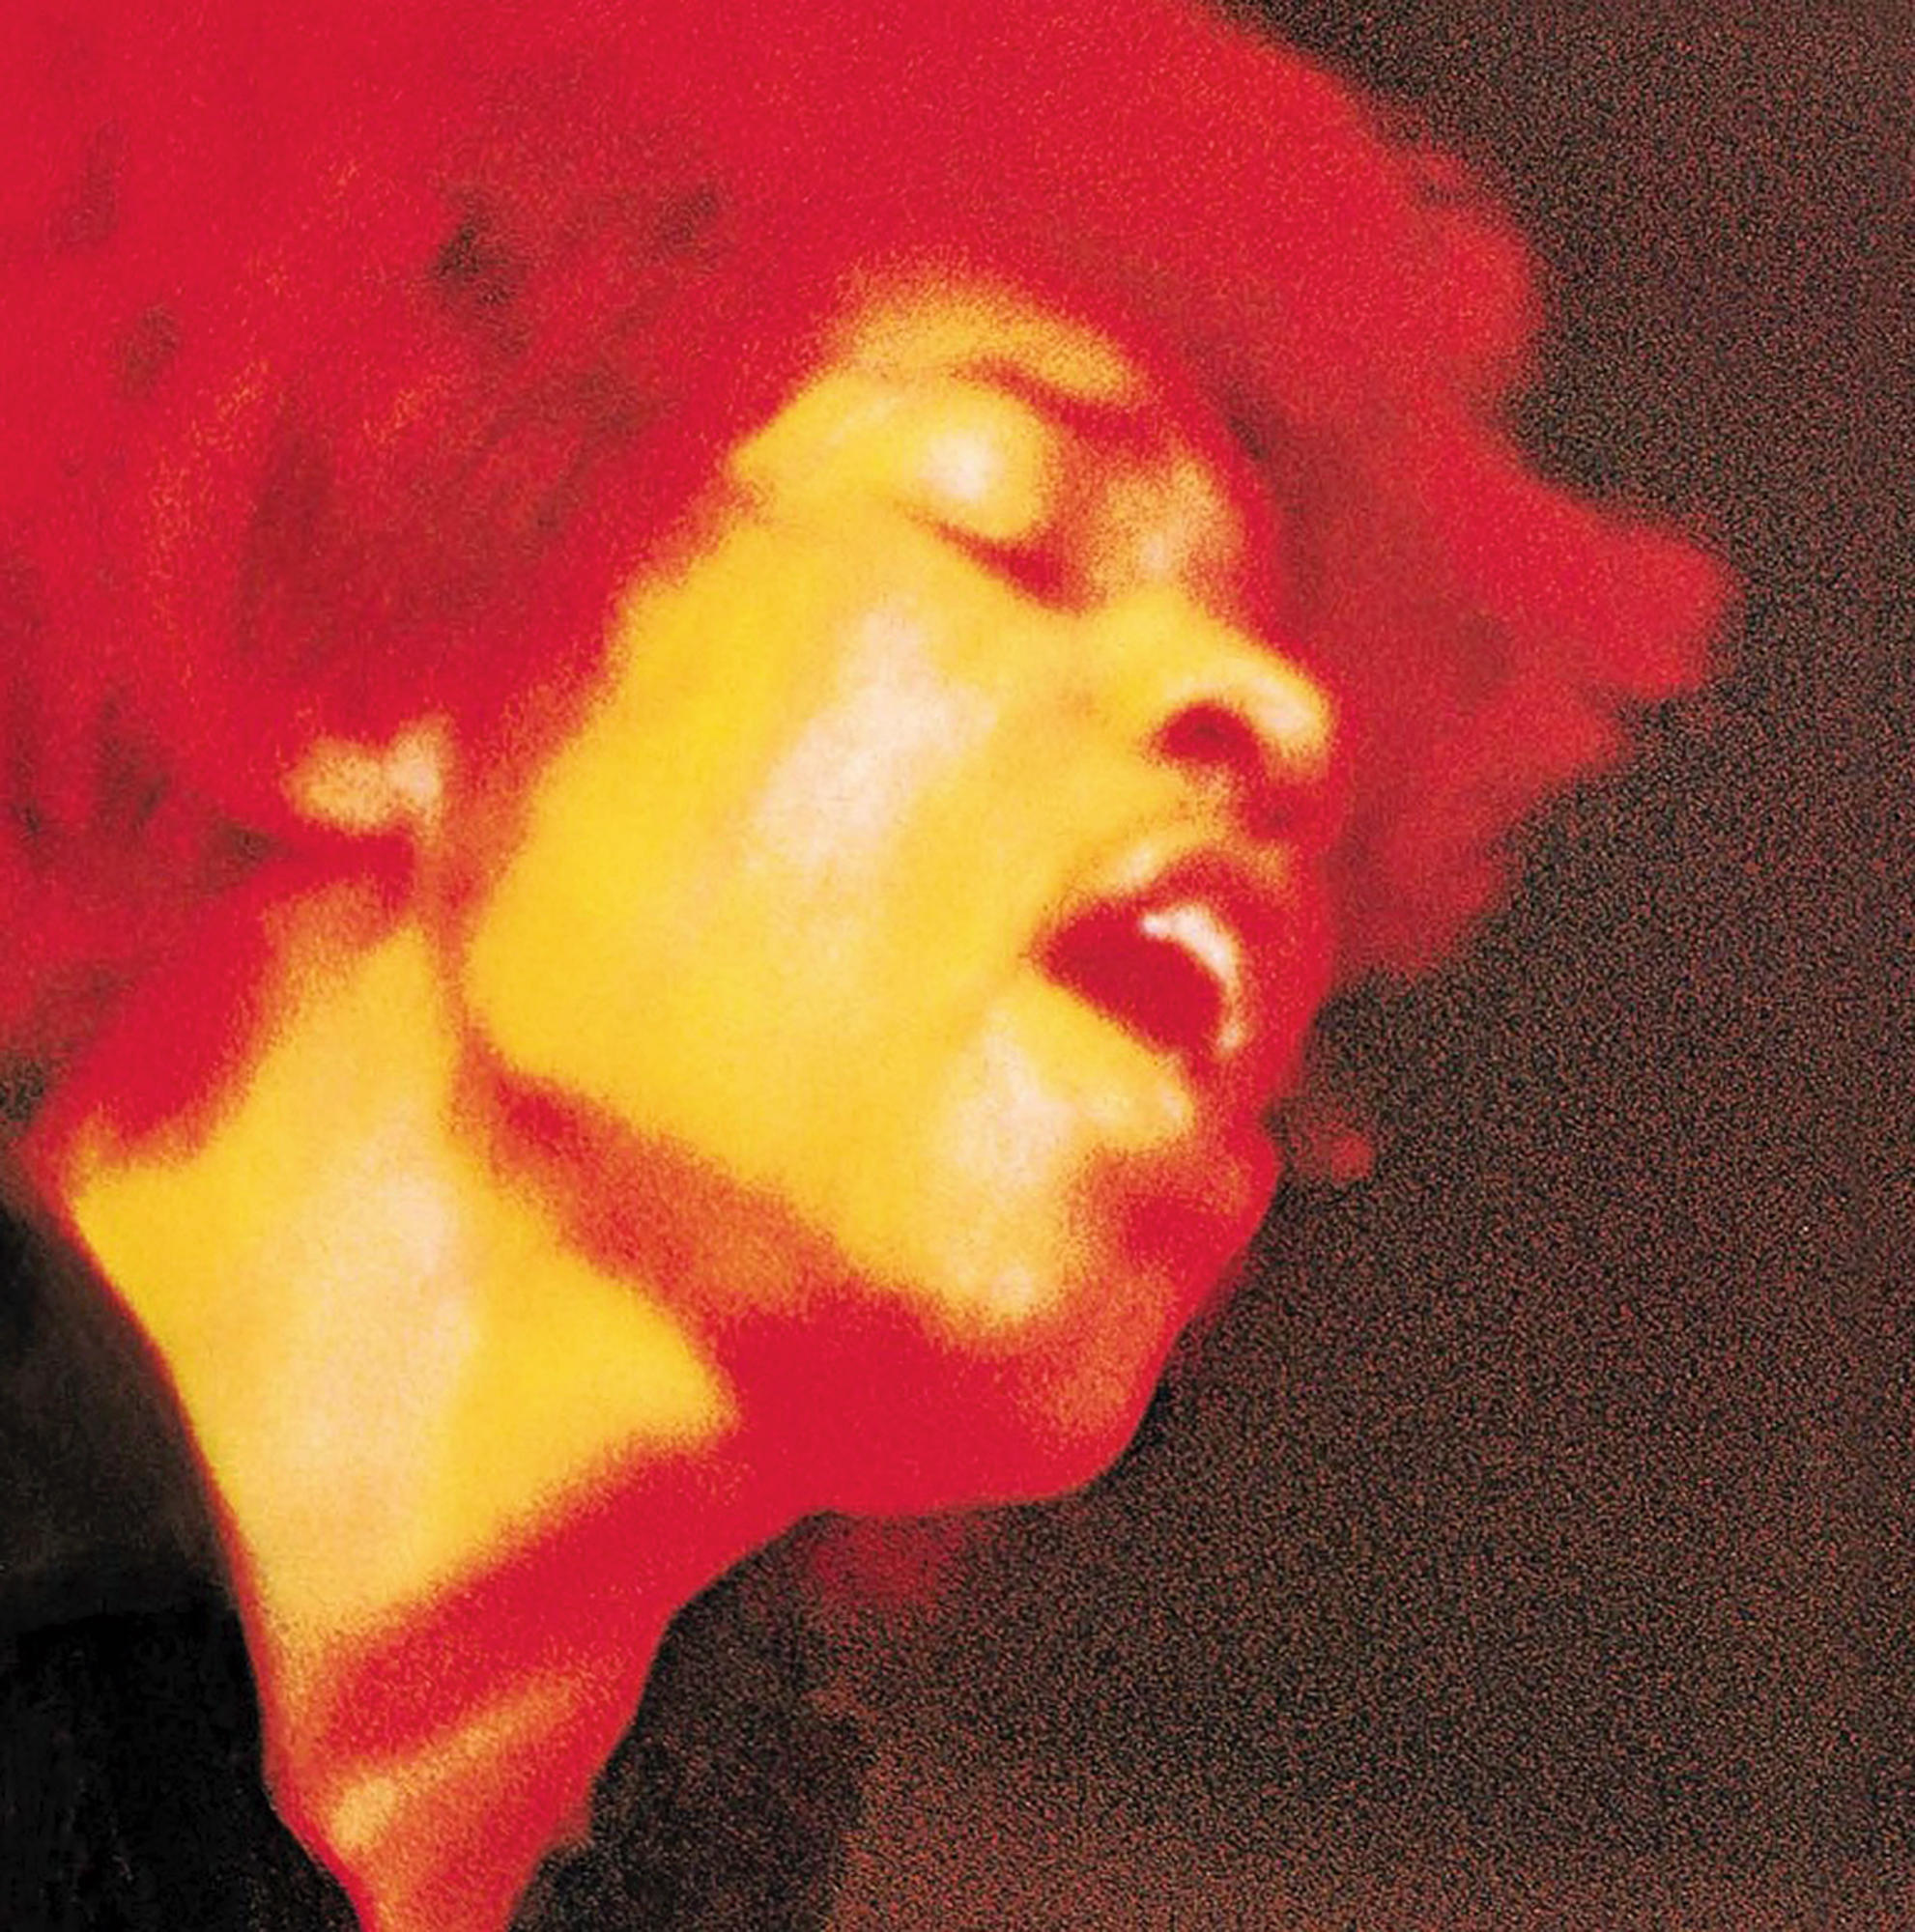 Ladyland Hendrix - Jimi Electric (CD) -